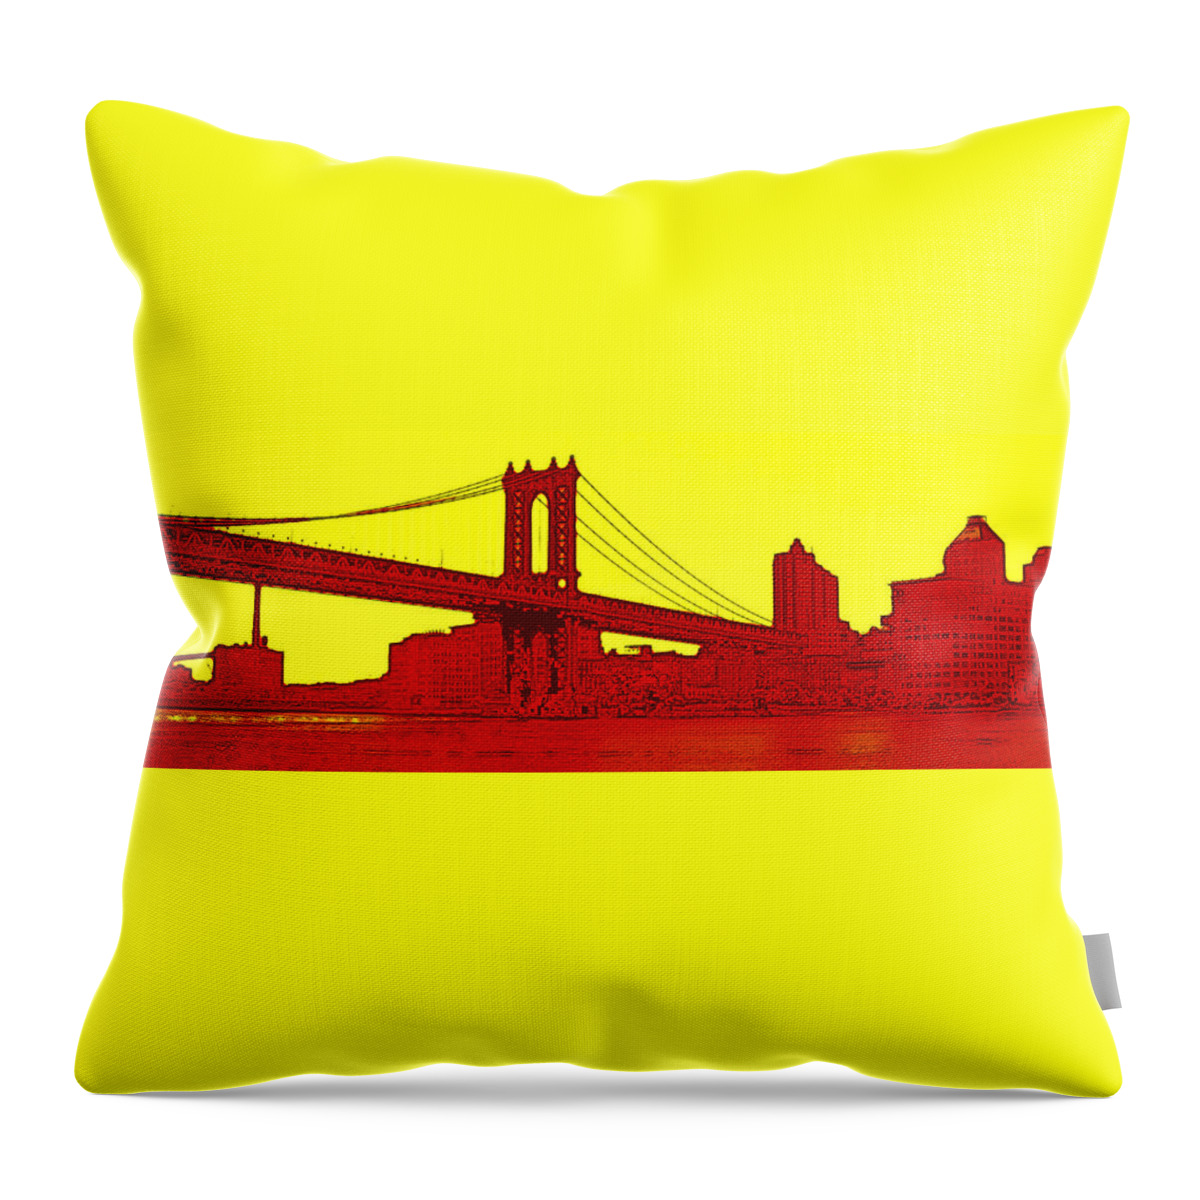 Manhattan Bridge Throw Pillow featuring the photograph Manhattan Bridge by Julie Lueders 